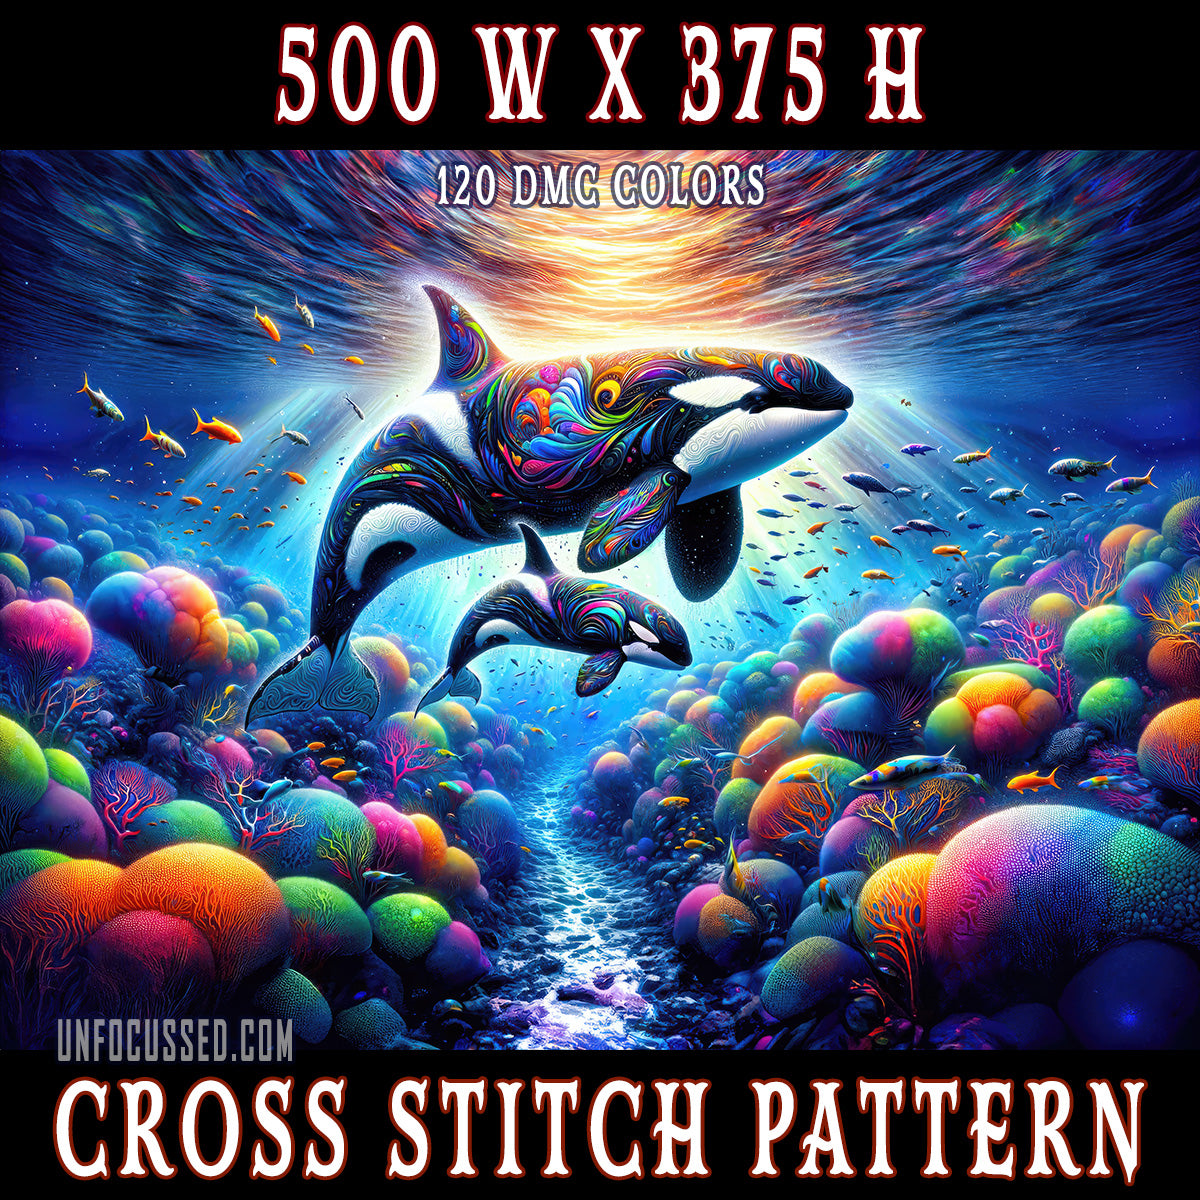 Lullaby of the Luminous Depths Cross Stitch Pattern